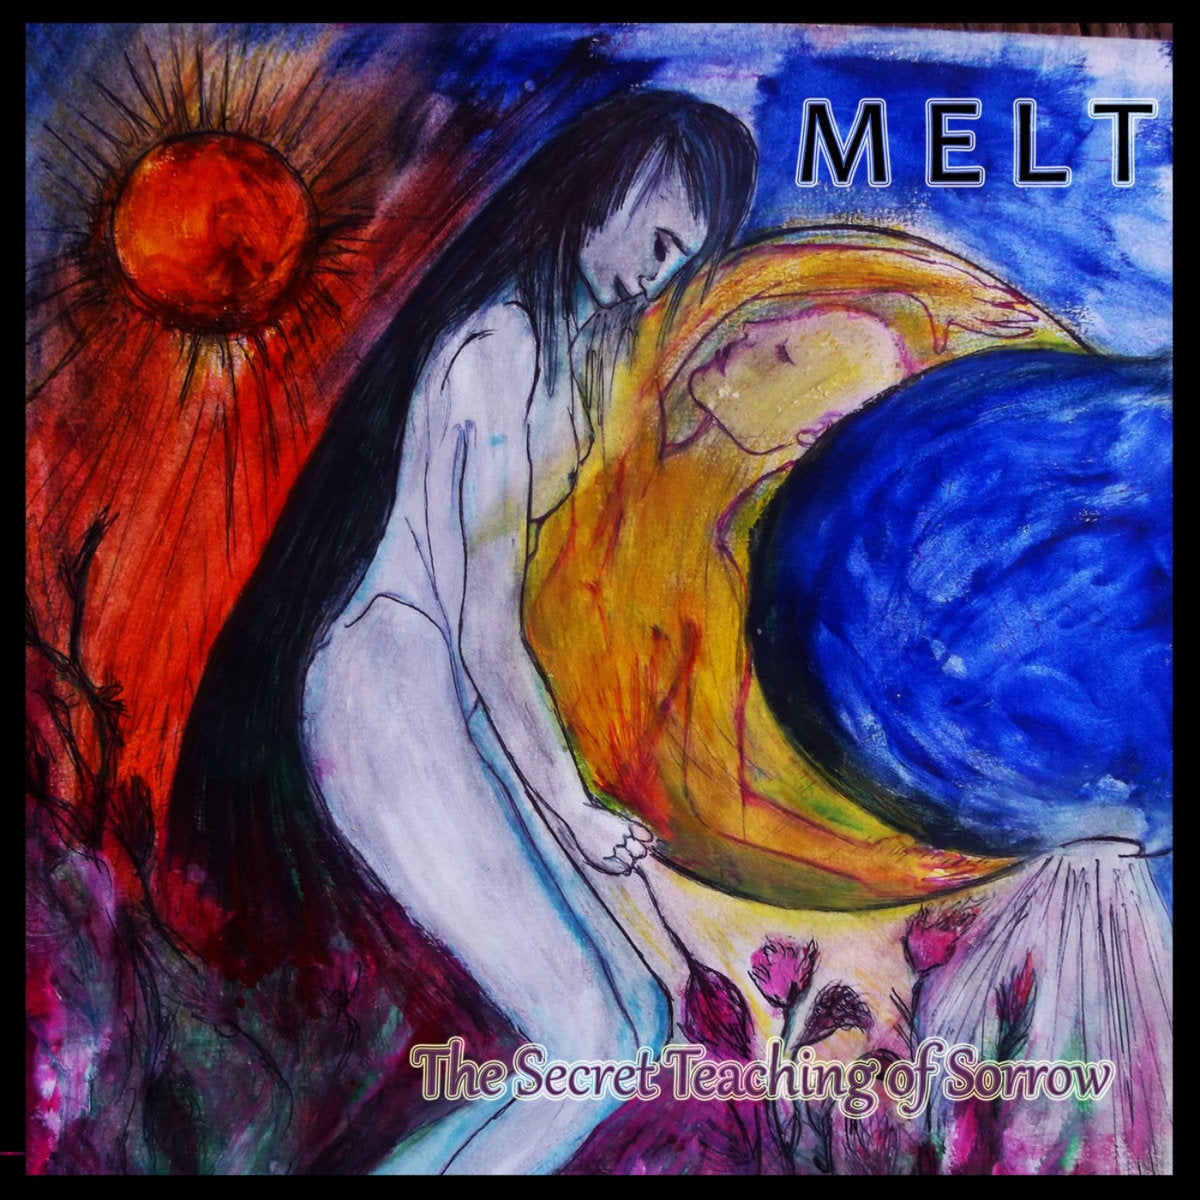 Melt - "The Secret Teaching of Sorrow" Compact Disc